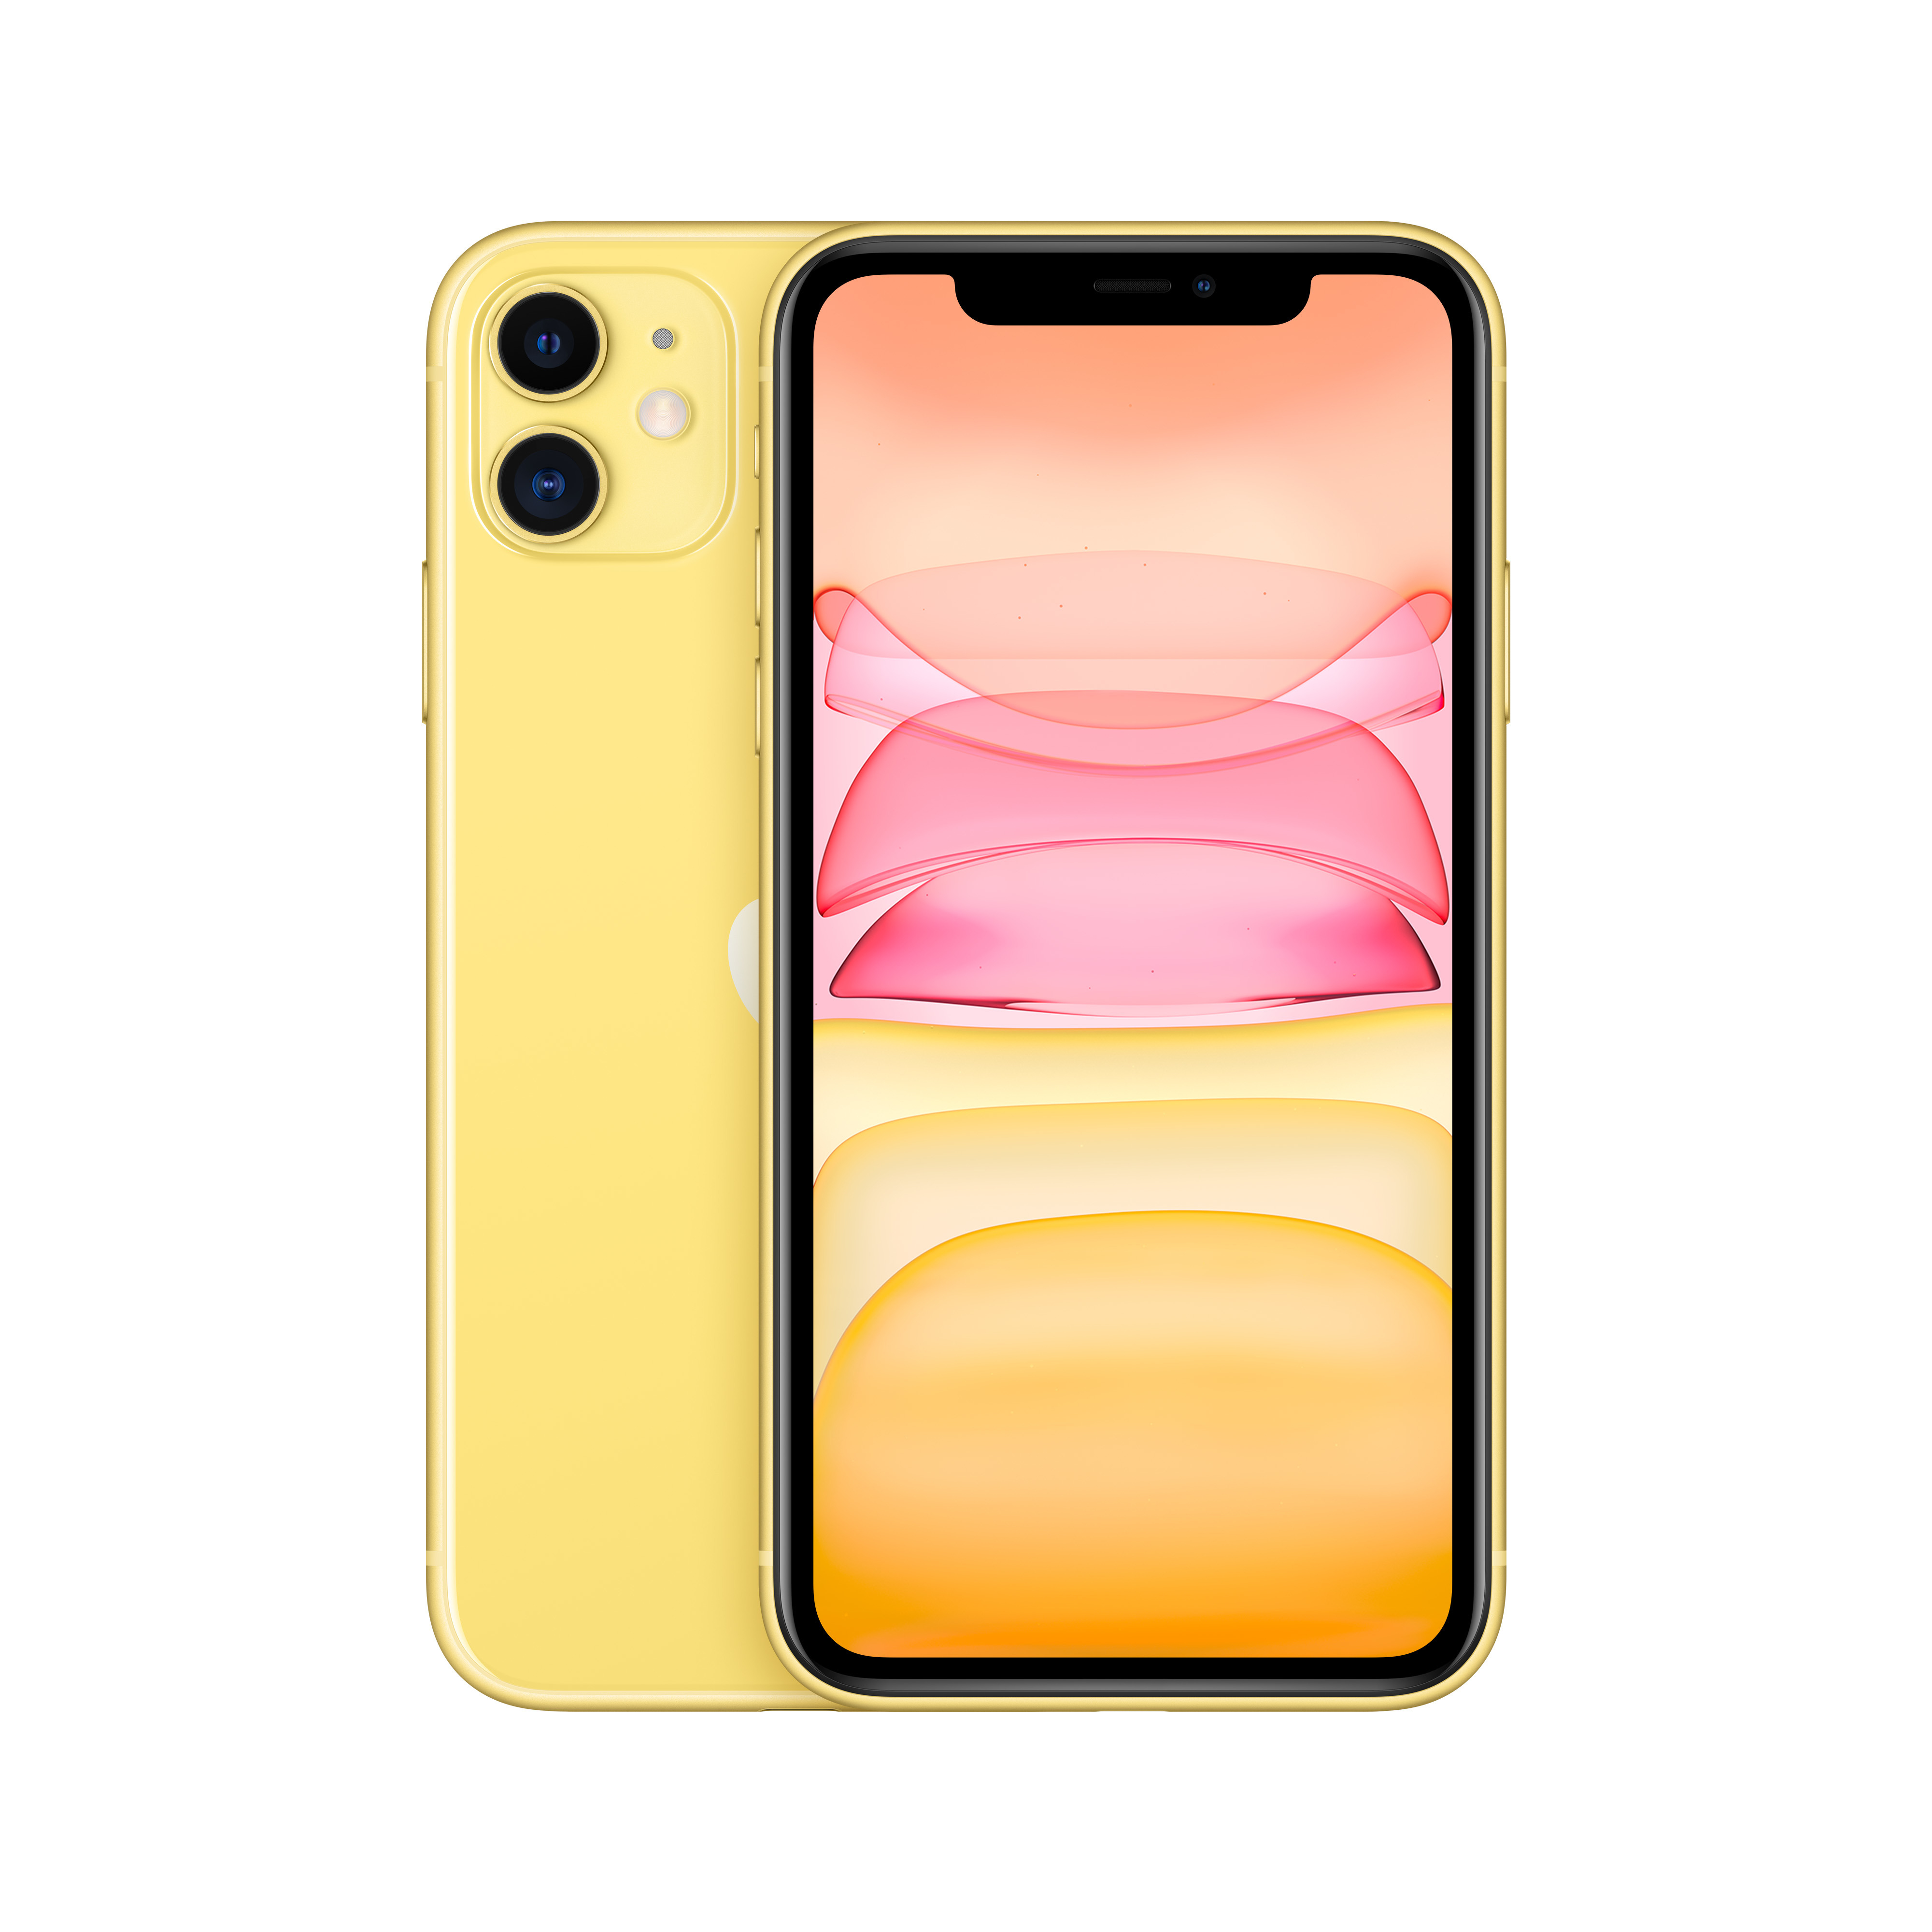 Apple iPhone 11 – 4G LTE Yellow 256GB Smartphone